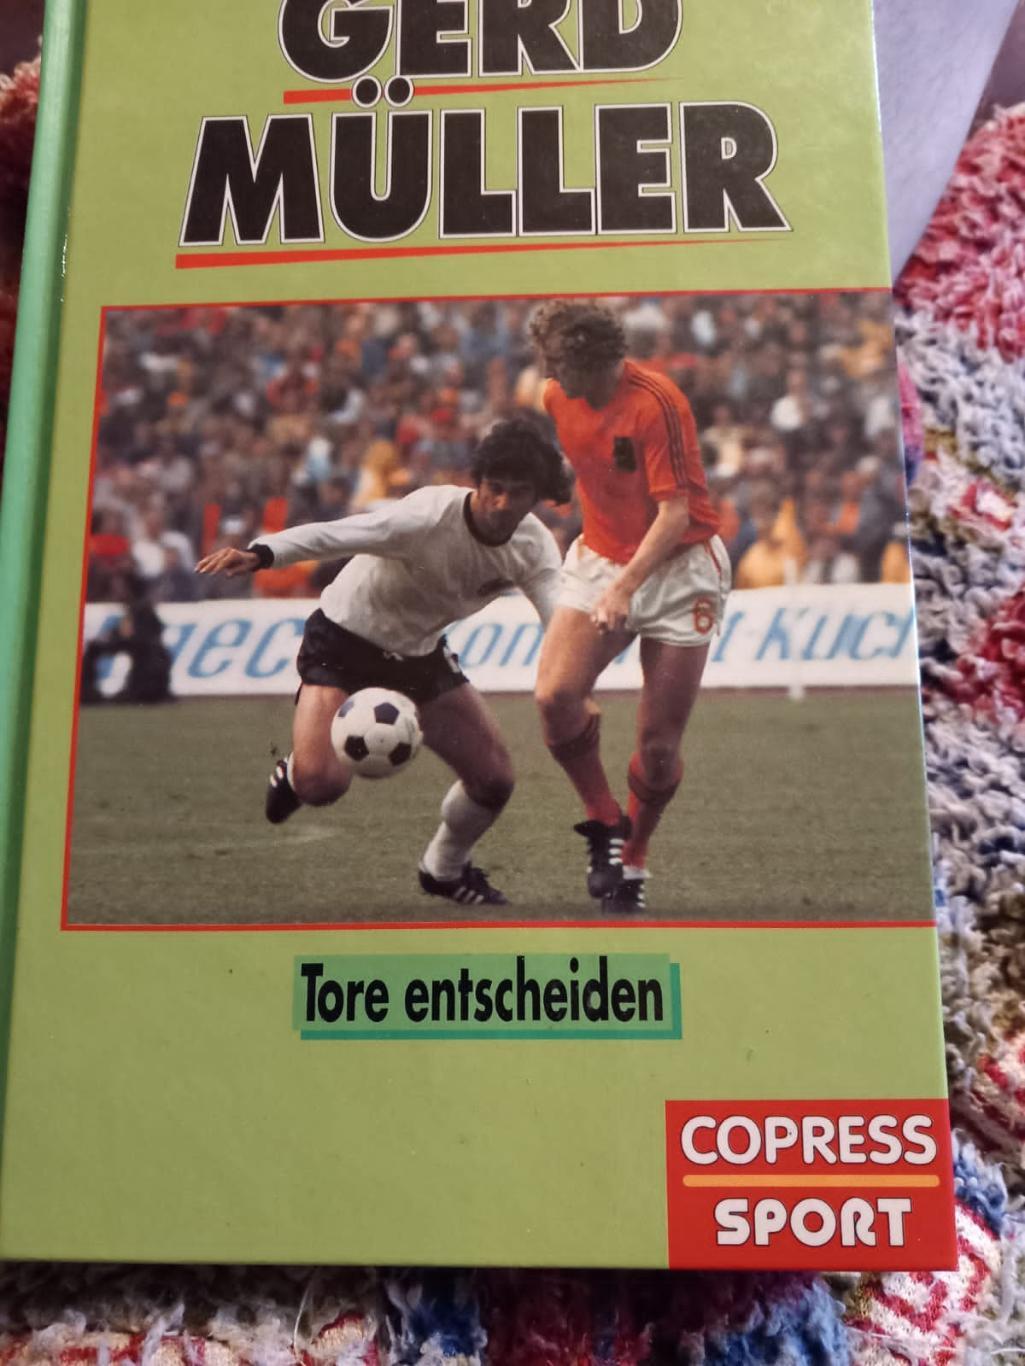 Герд мюллер 1992